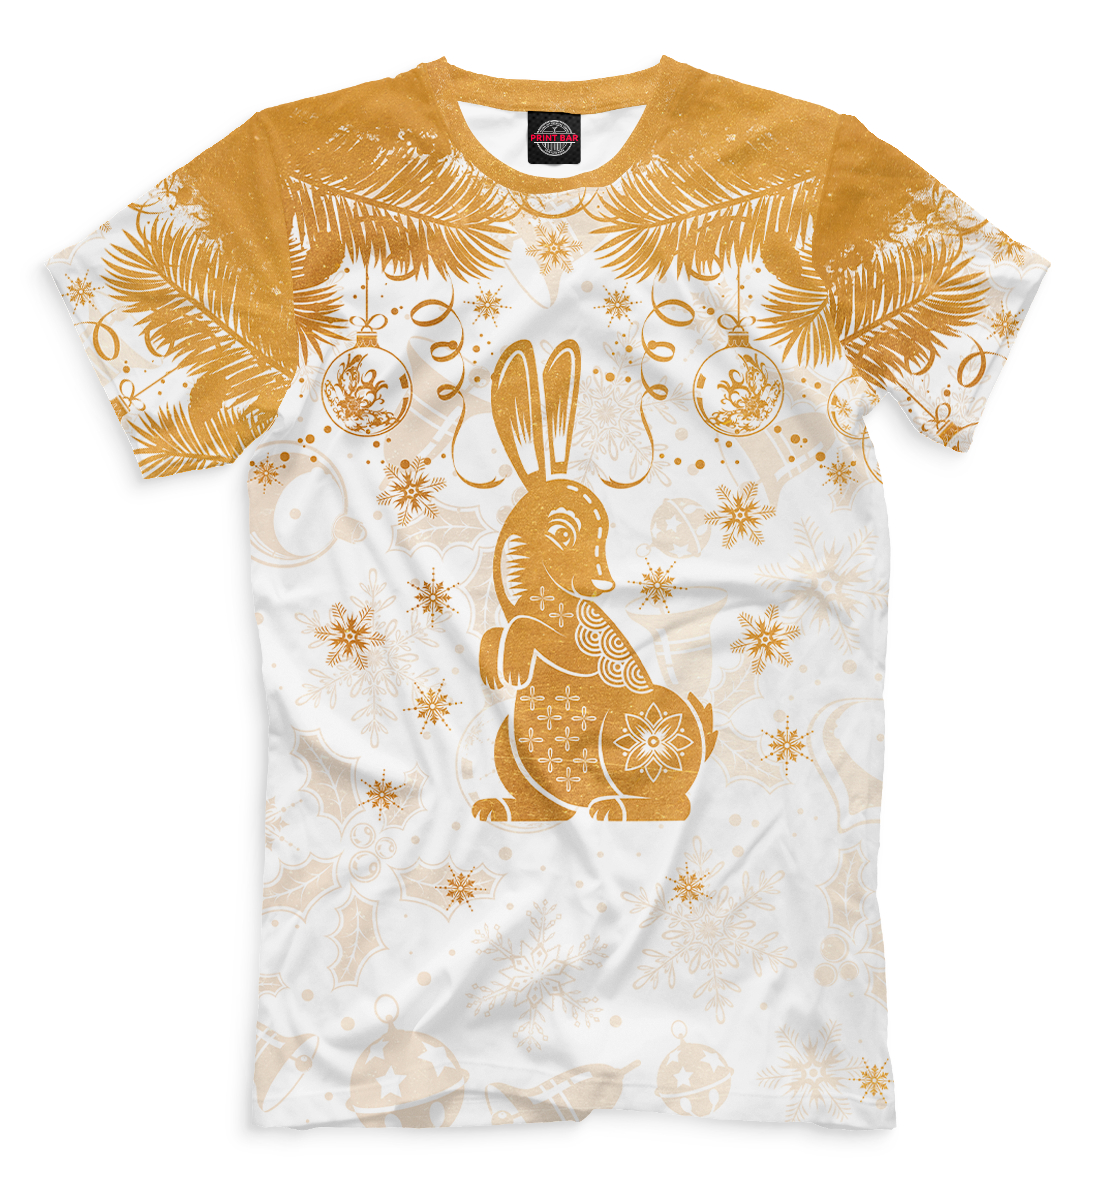 Футболка Золотой кролик для мужчин, артикул: YOT-186992-fut-2mp